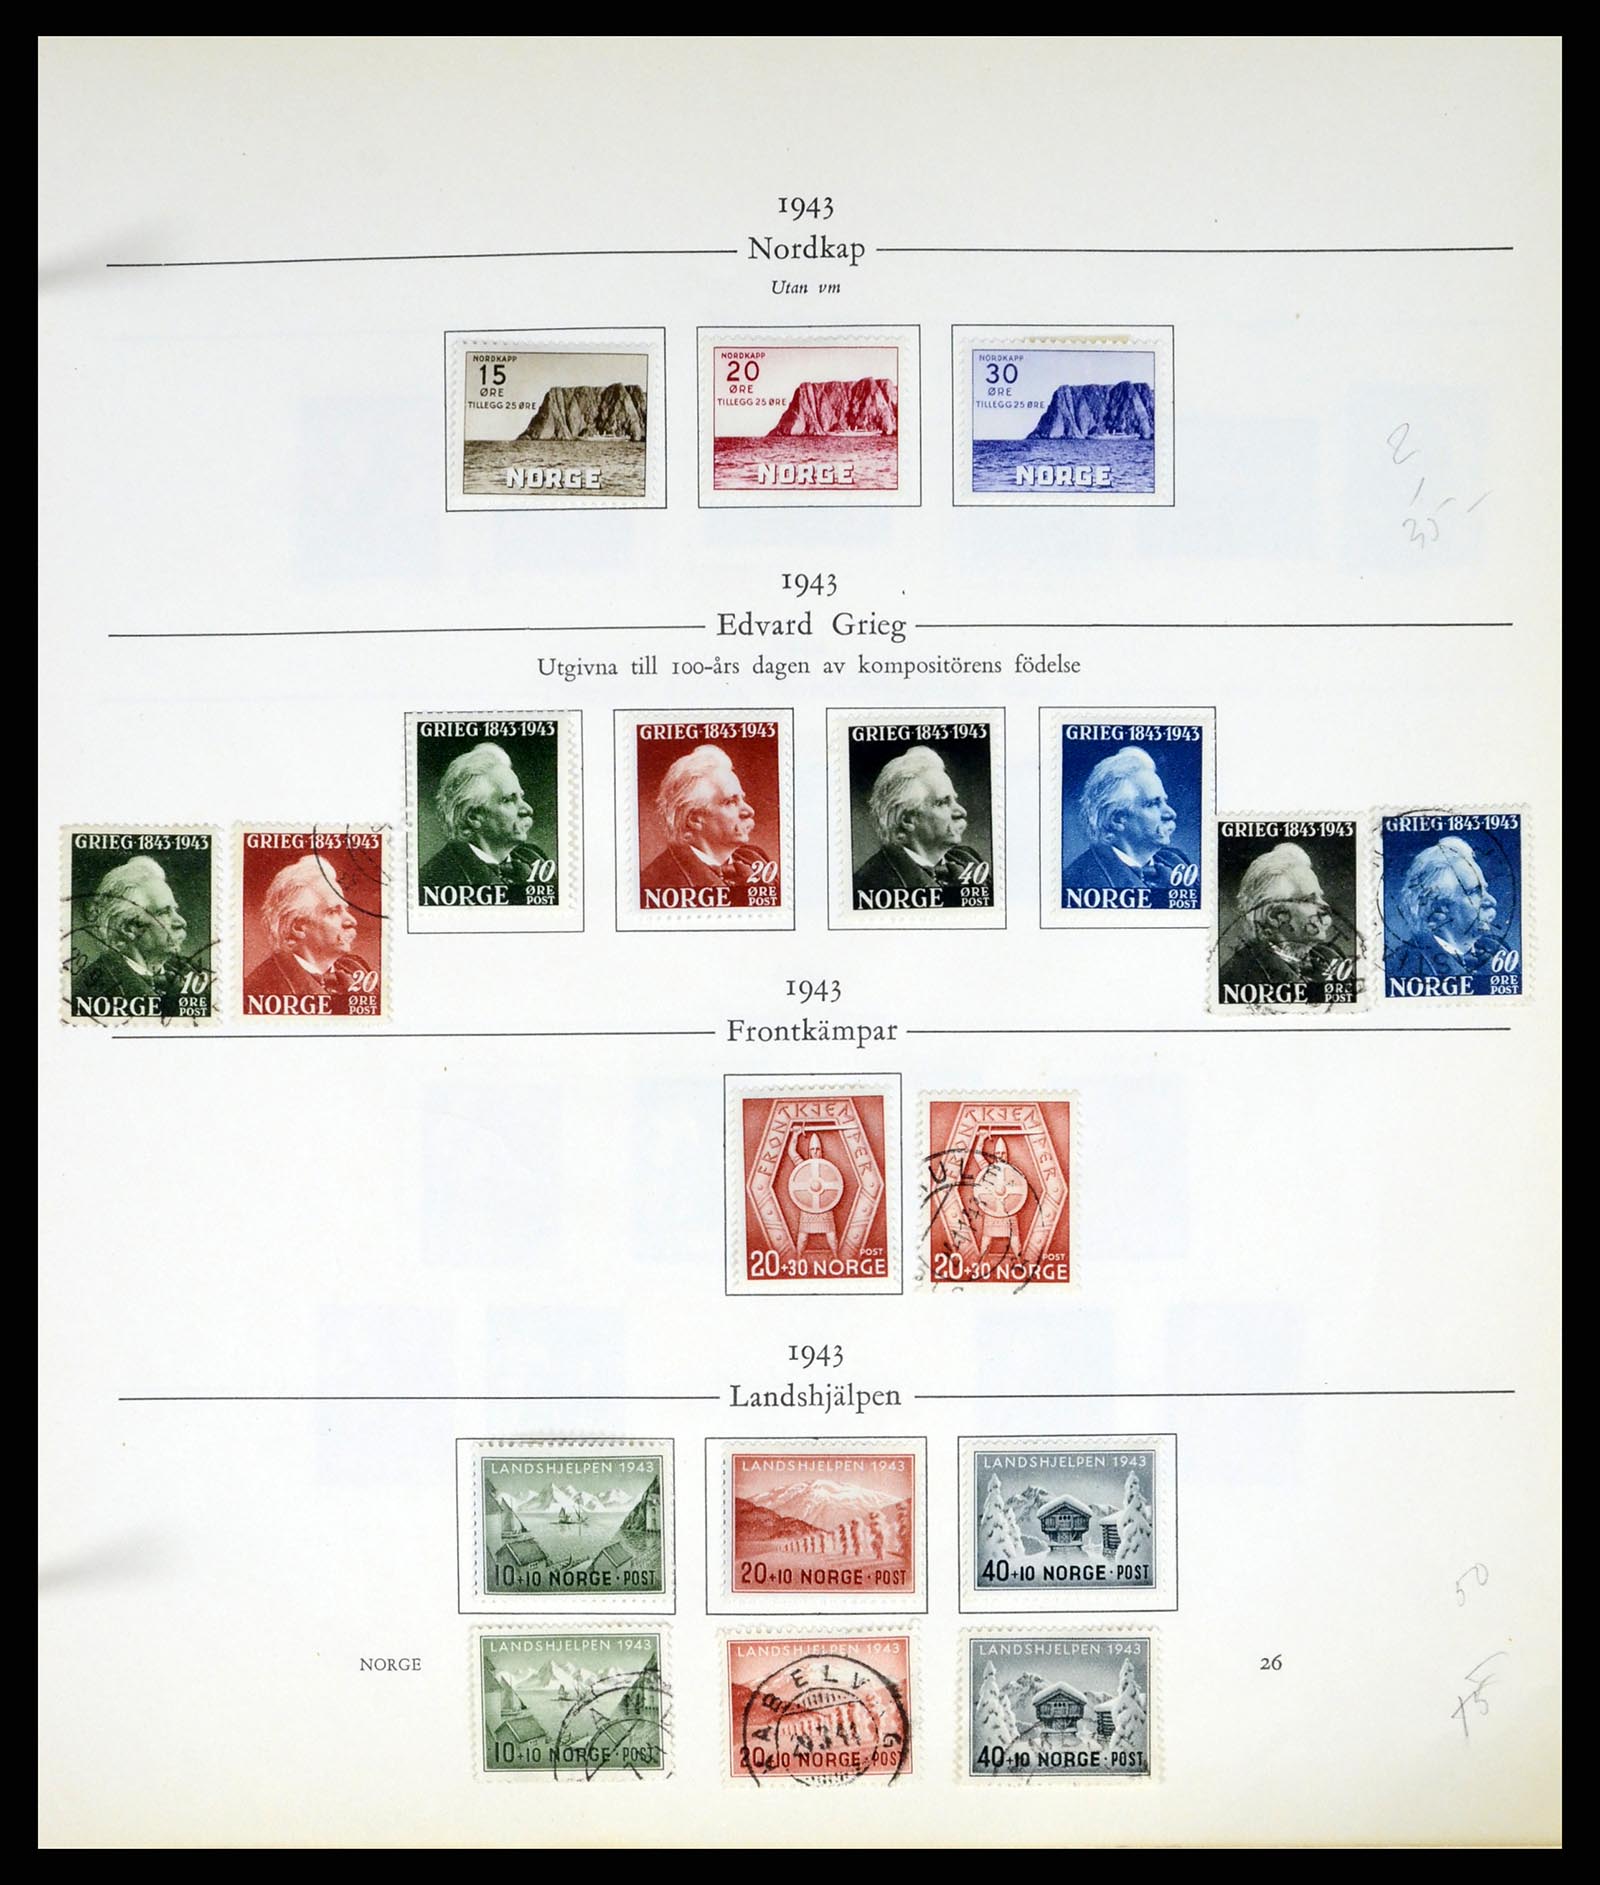 37387 027 - Stamp collection 37387 Scandinavia 1851-1960.